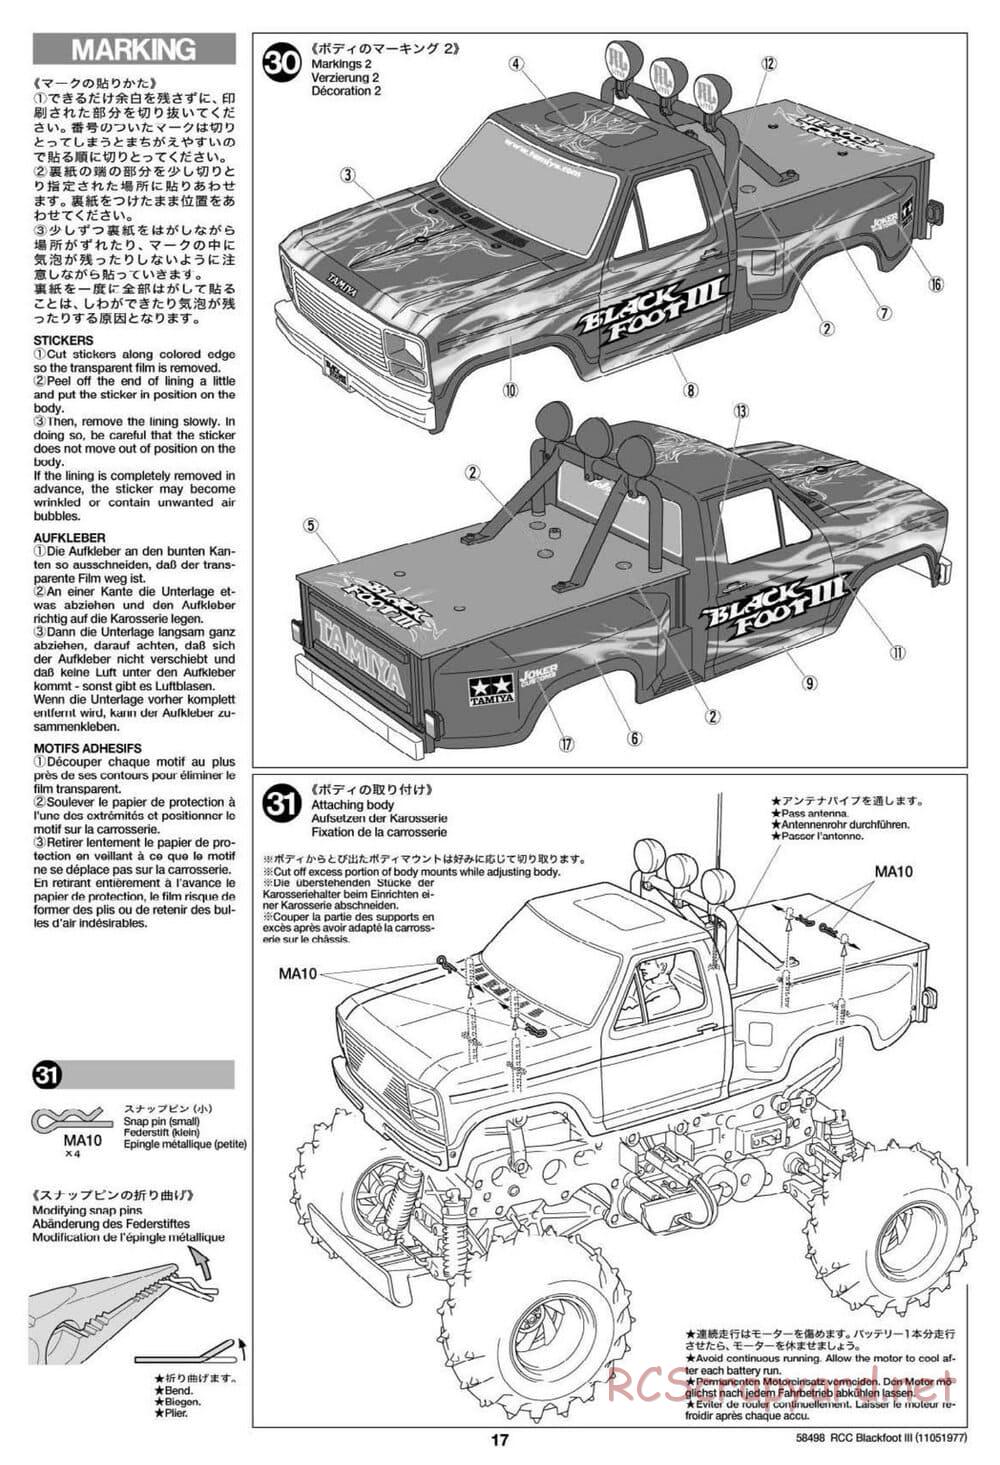 Tamiya - Blackfoot III - WT-01 Chassis - Manual - Page 17